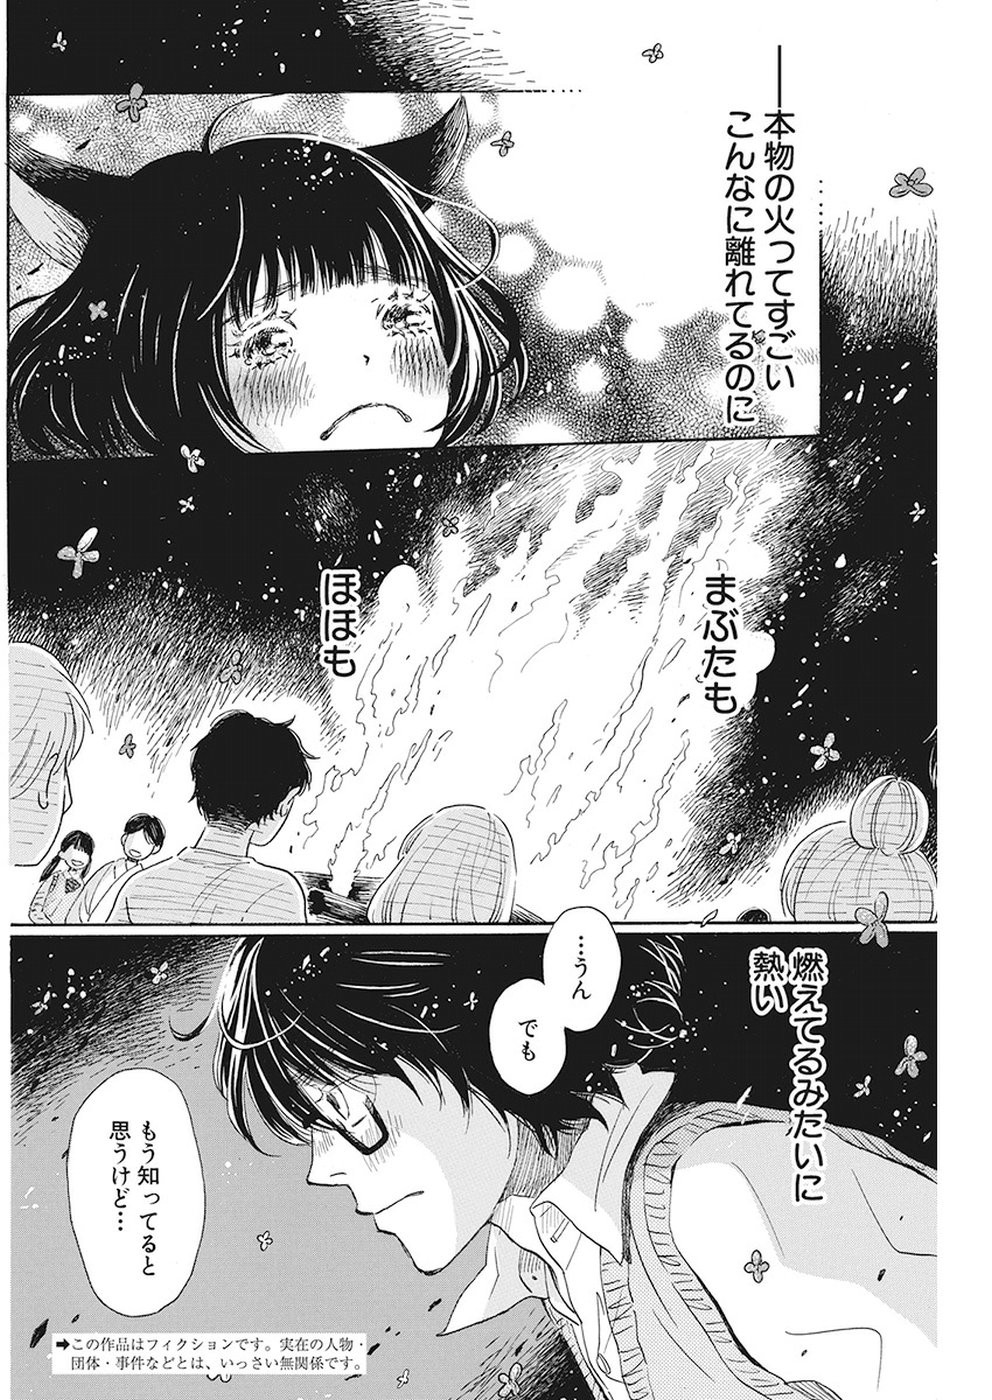 3 Gatsu no Lion - Chapter 155 - Page 2